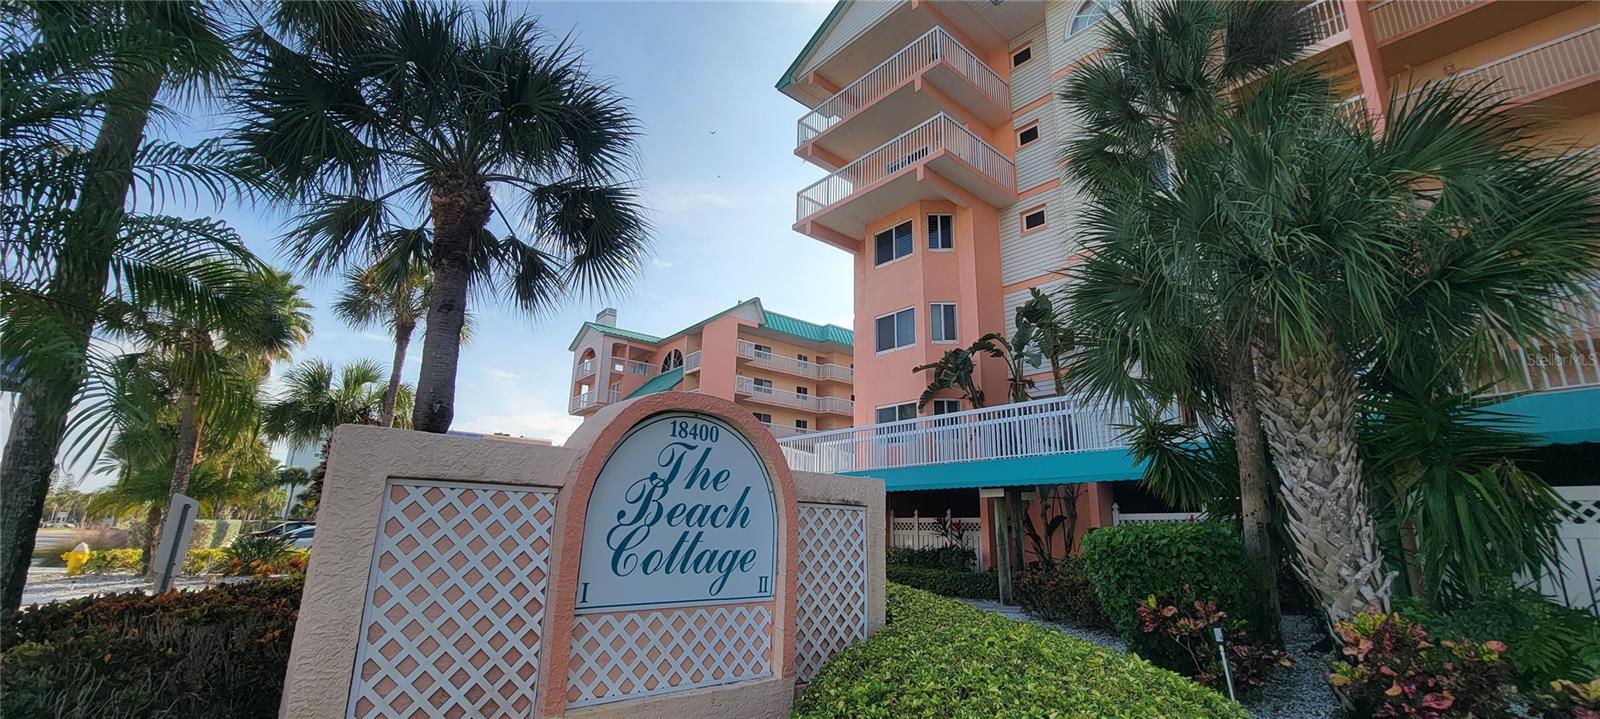 Make Beach Cottage Condo your Florida Lifestyle!